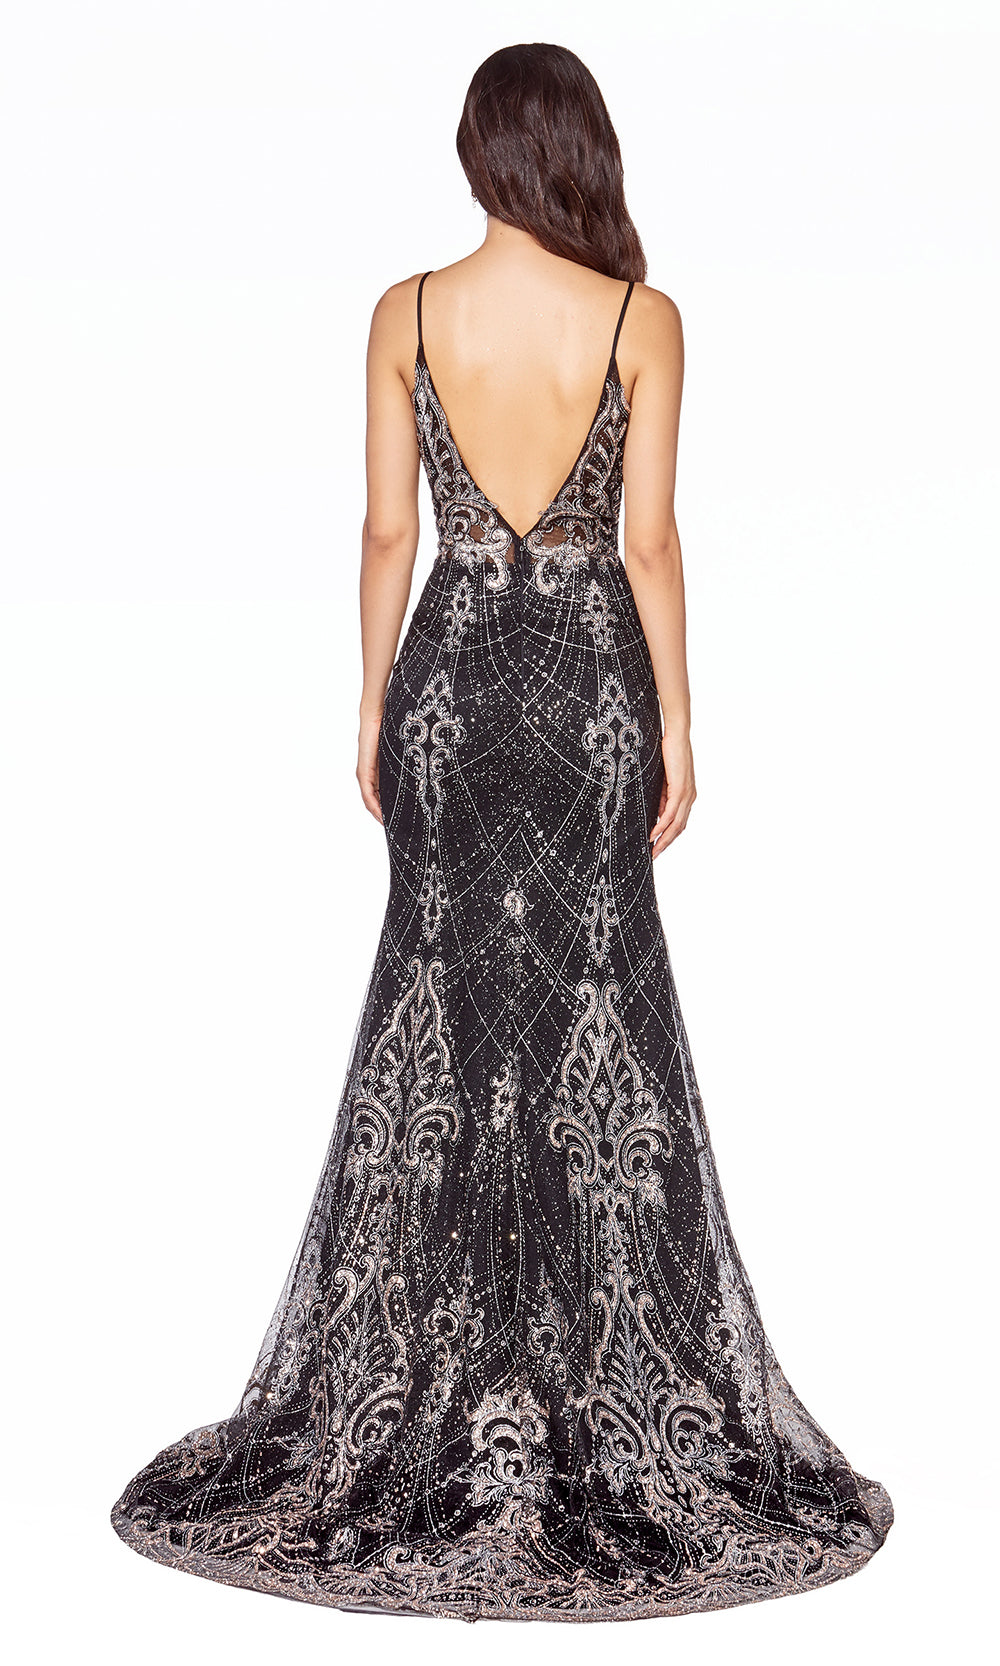 Cinderella Divine C27 long black sequin lace dress with straps & low back-back of dres.jpg